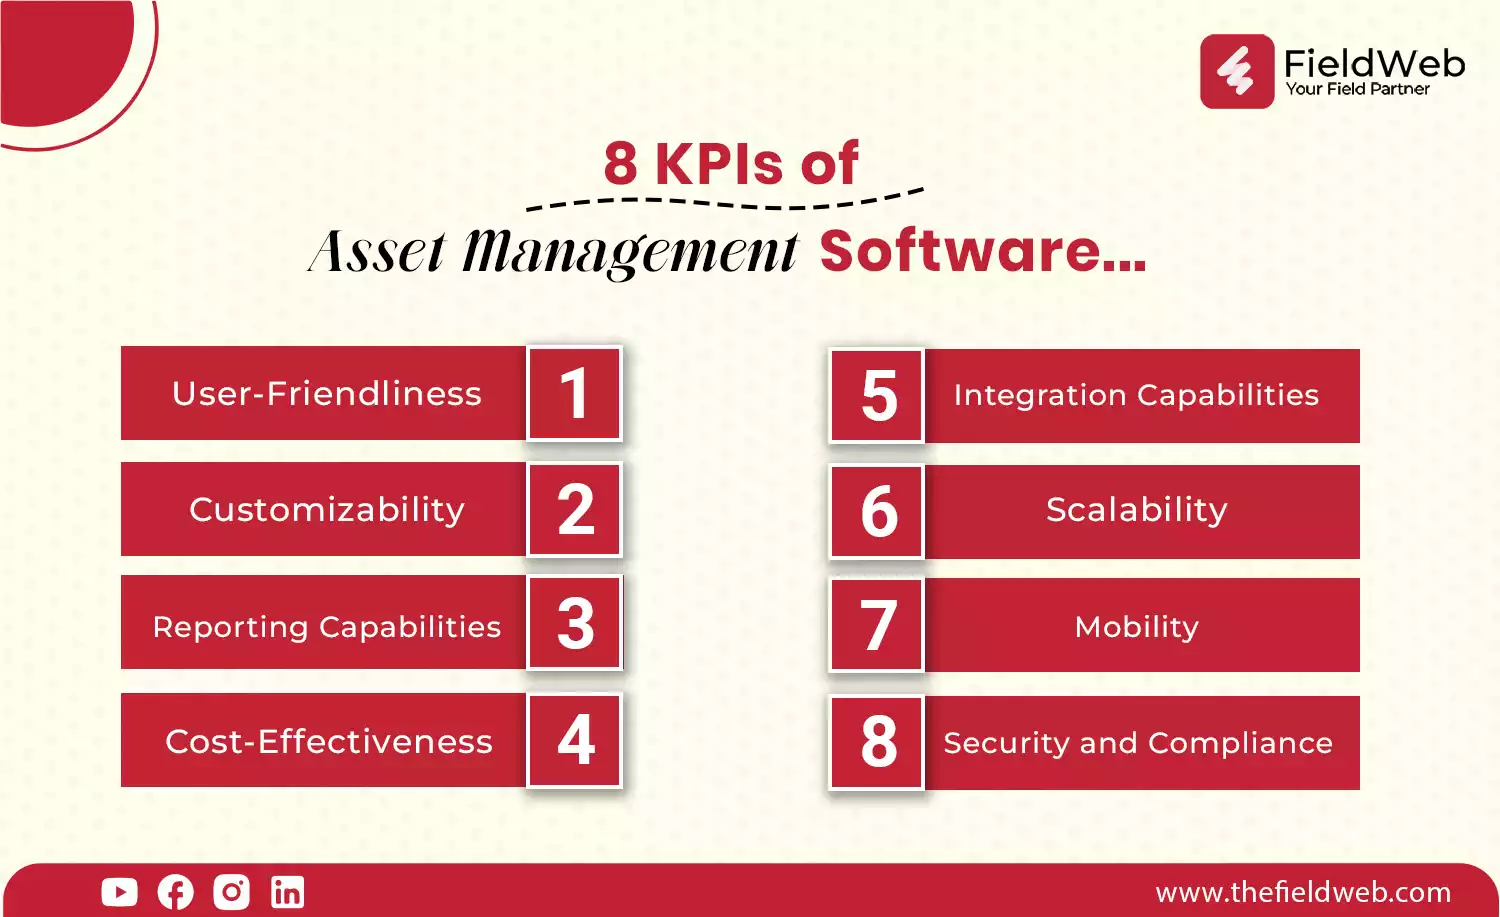 image is displaying 8 KPIs to choose asset management software